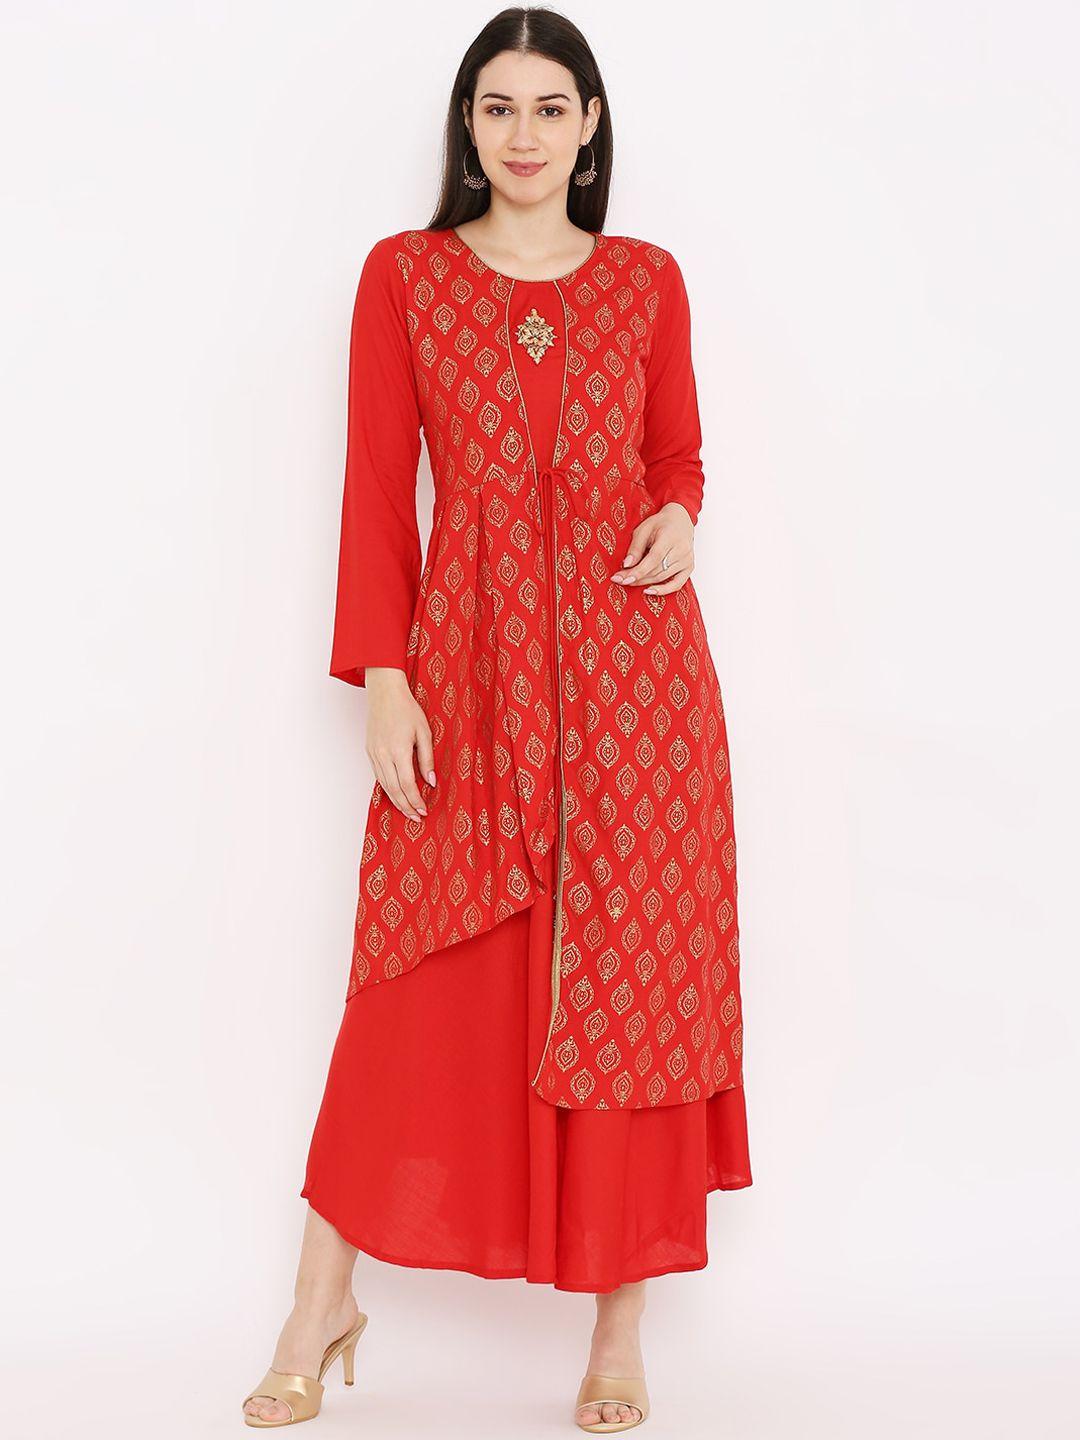 peppertree red & golden ethnic motifs layered ethnic midi dress